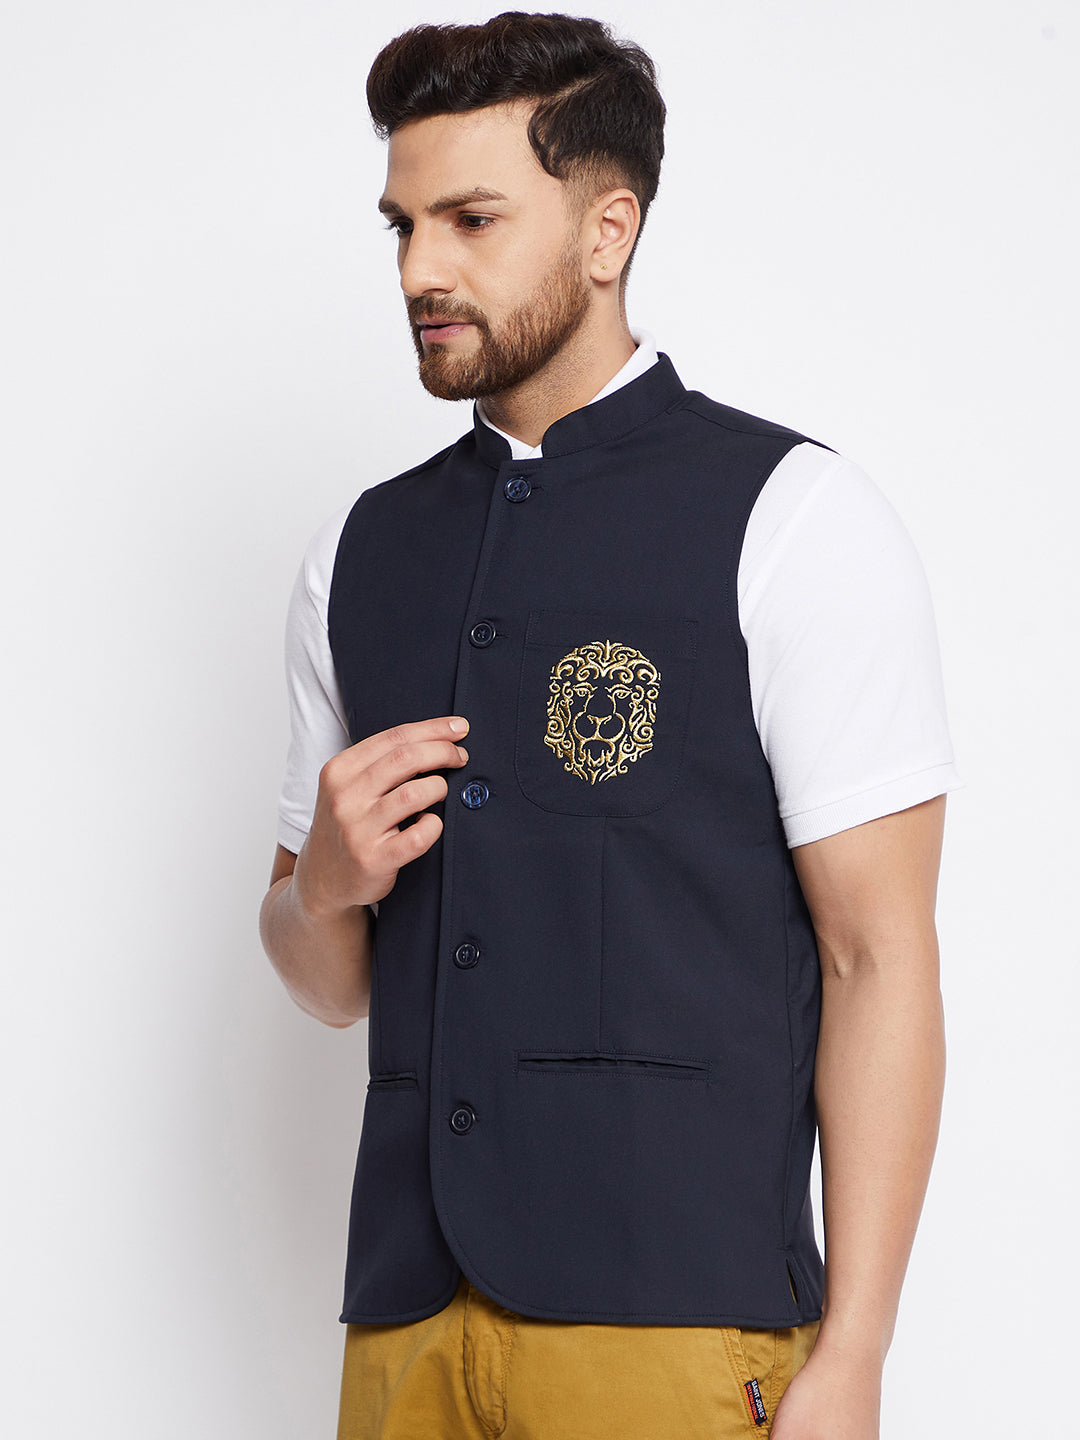 Men's Black Woven Design Jacket - Even Apparels